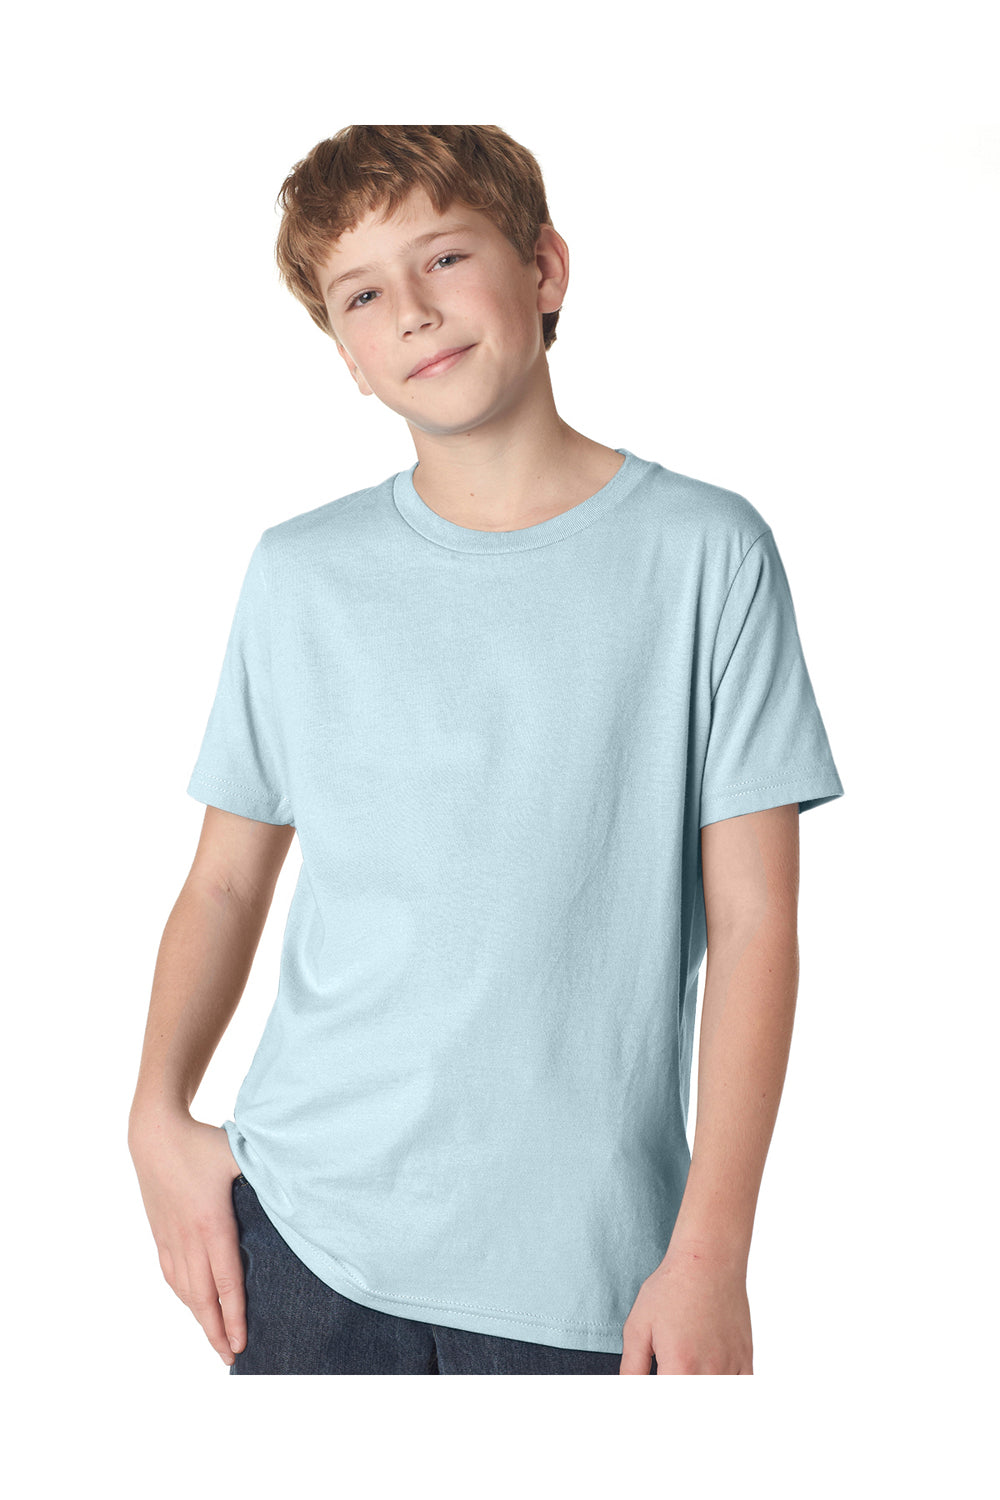 Next Level 3310 Youth Fine Jersey Short Sleeve Crewneck T-Shirt Light Blue Front